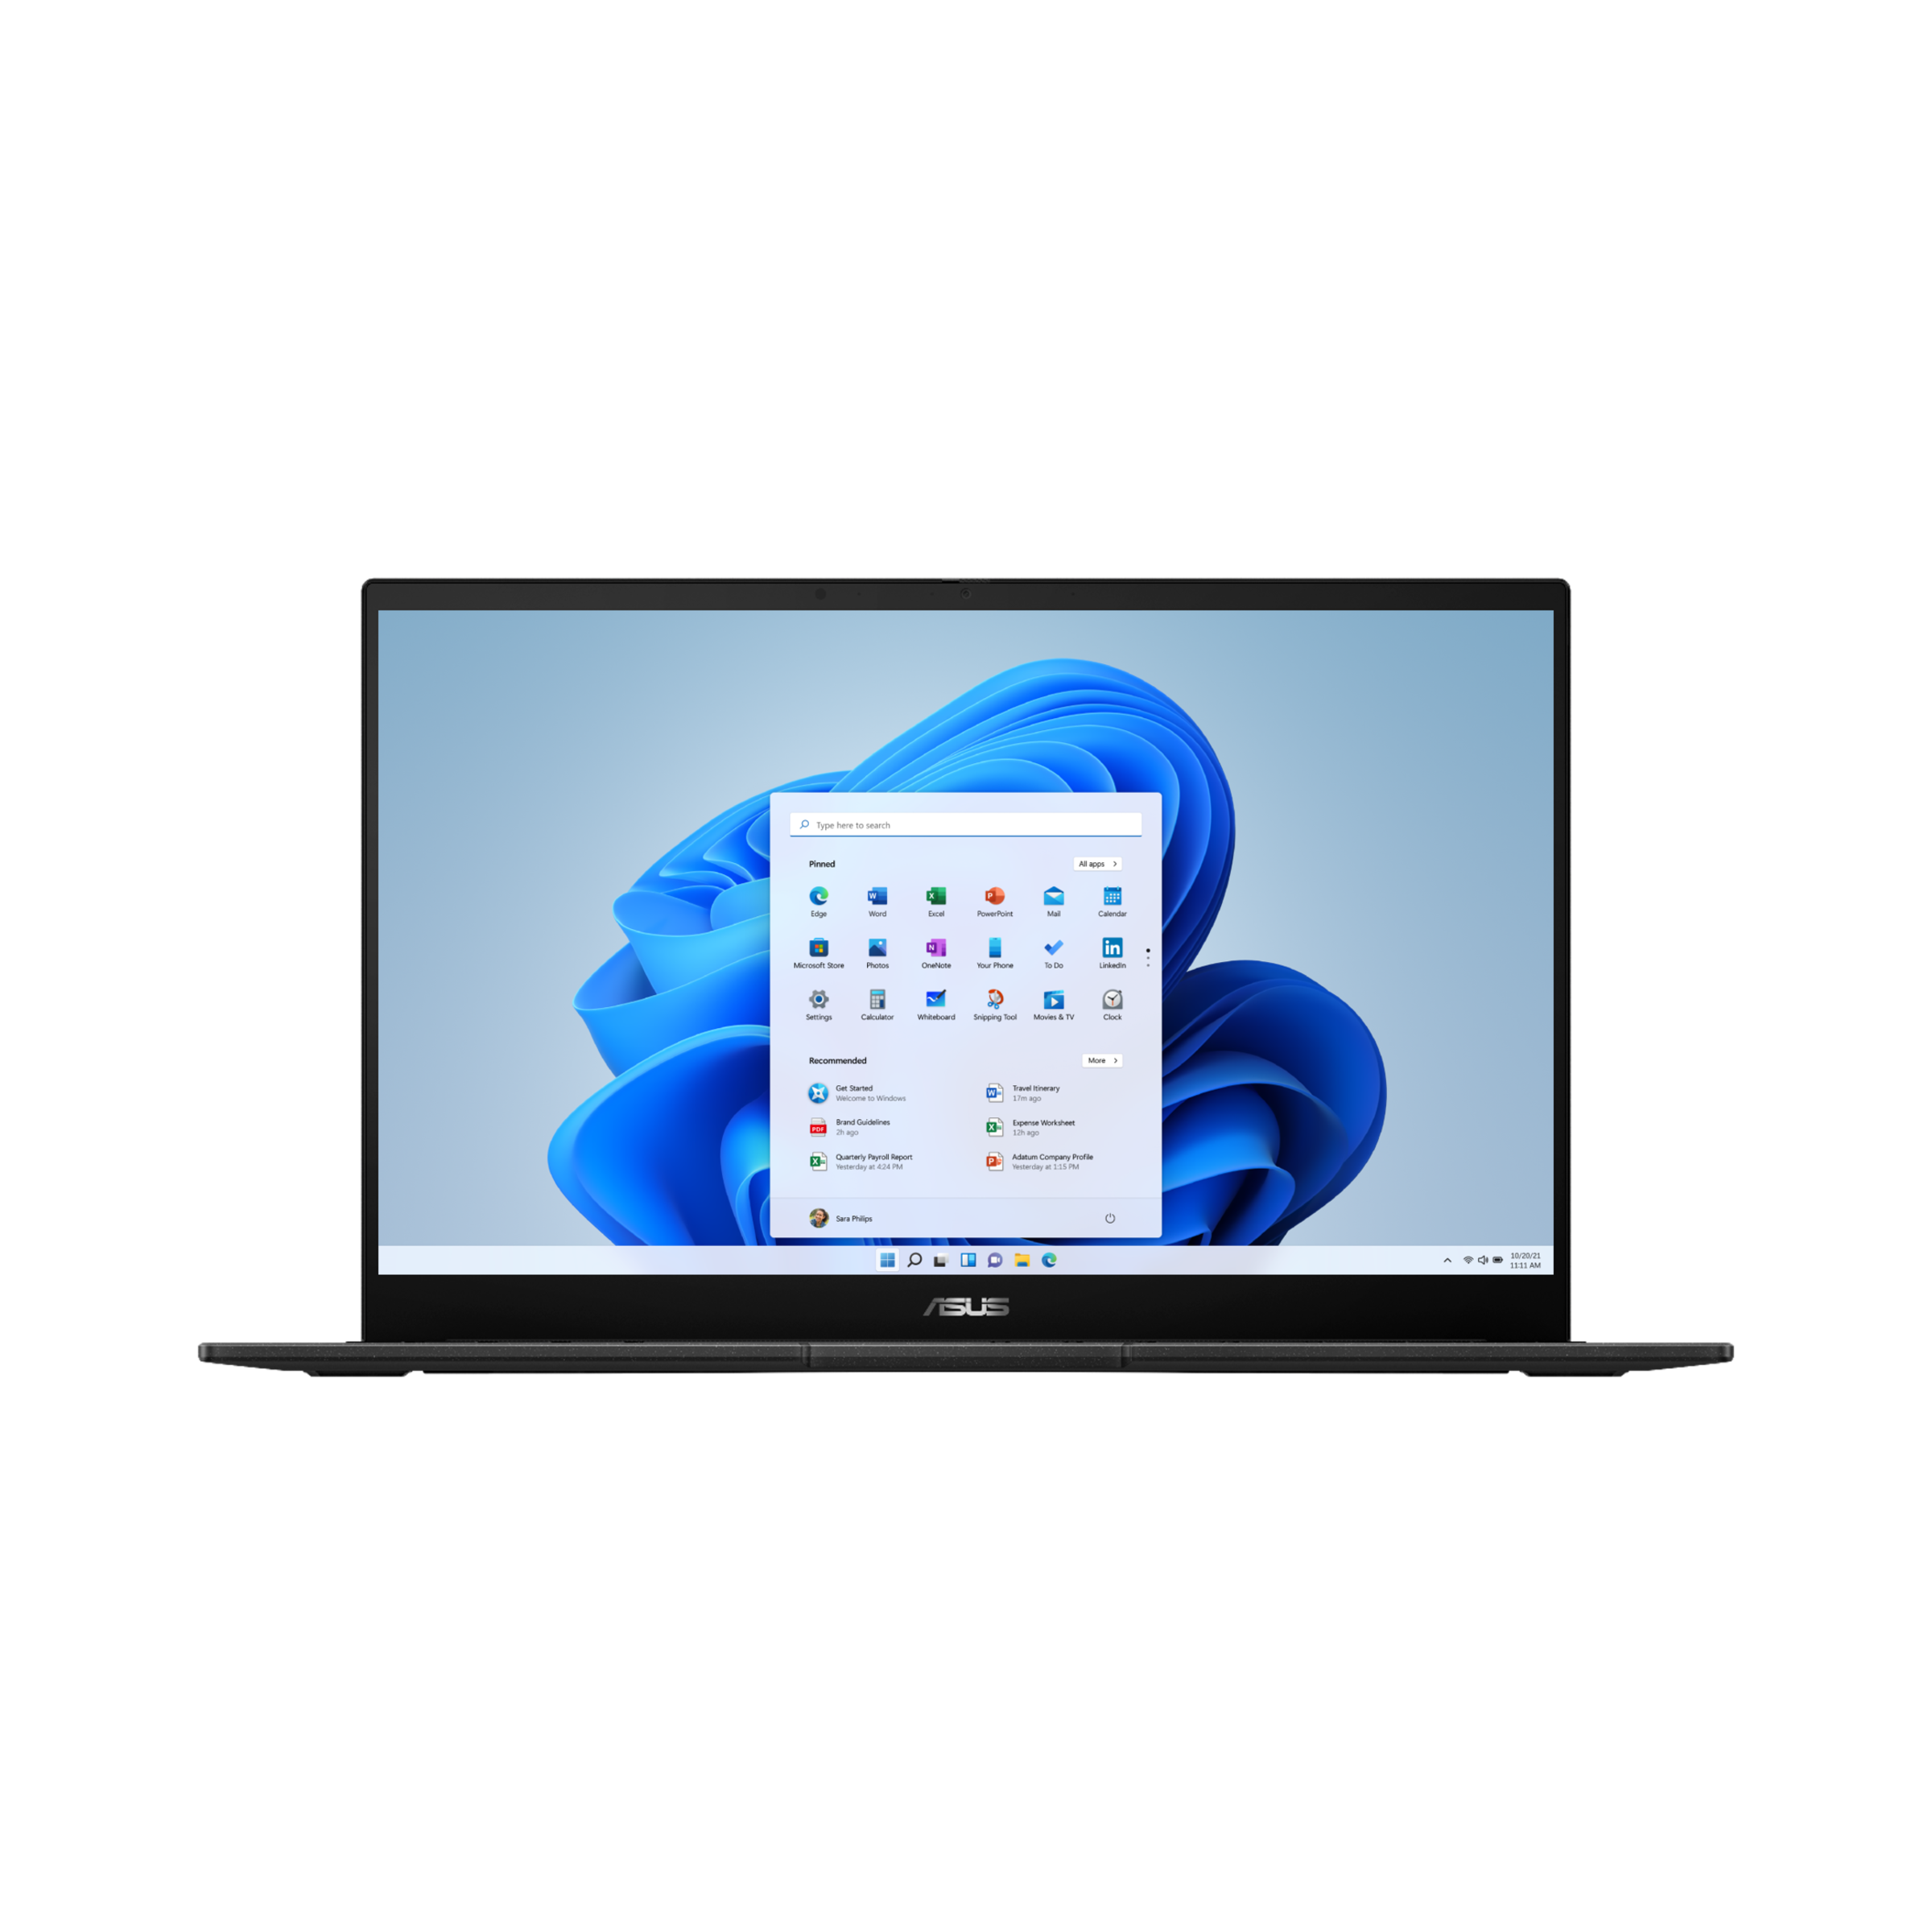 ASUS Creator Laptop Q (Q540)｜Laptops For Home｜ASUS Global